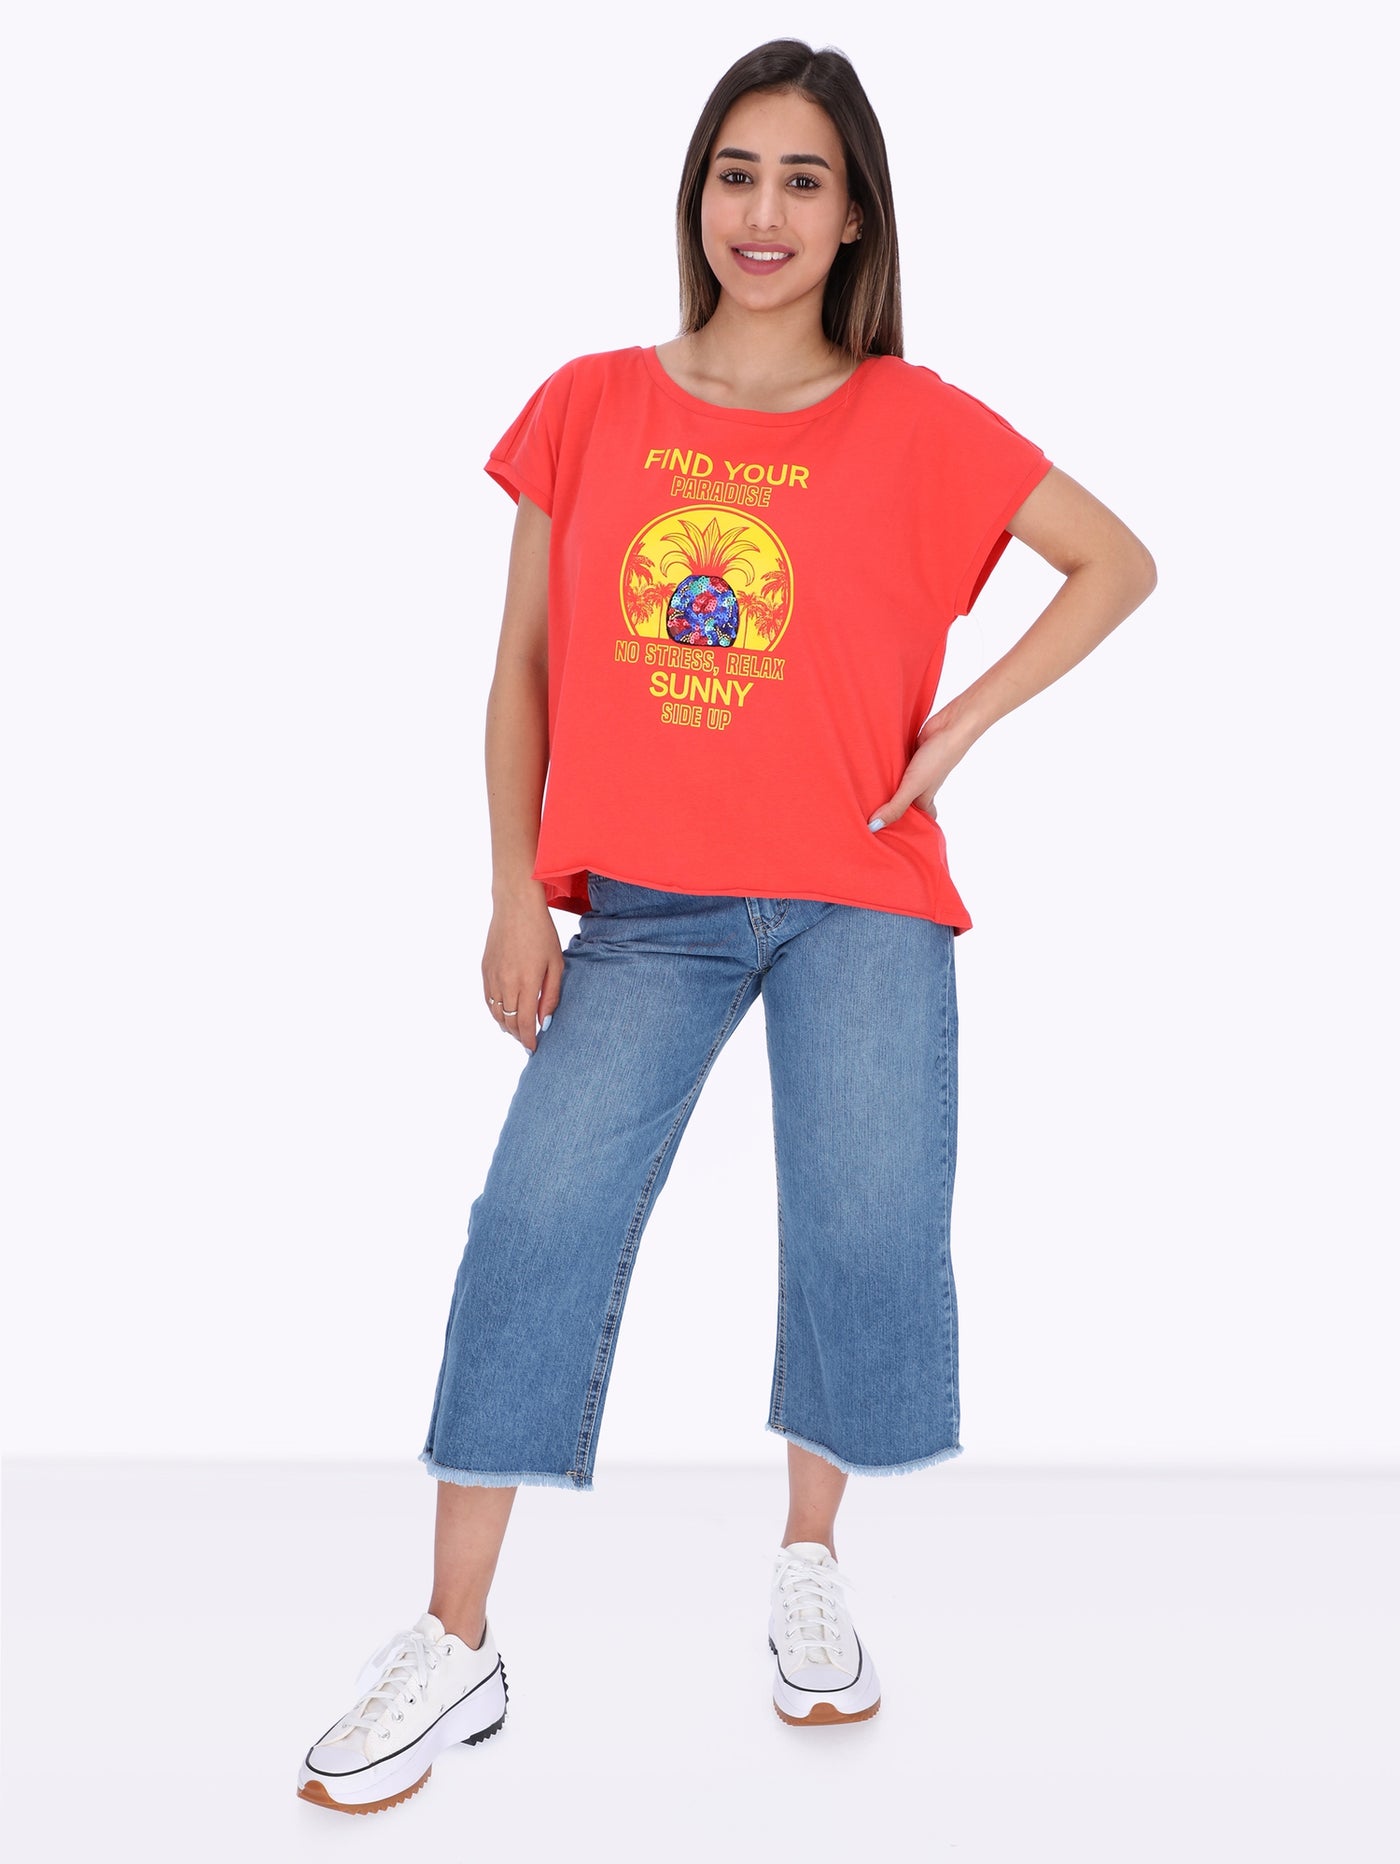 OR Women's Printed T-Shirt